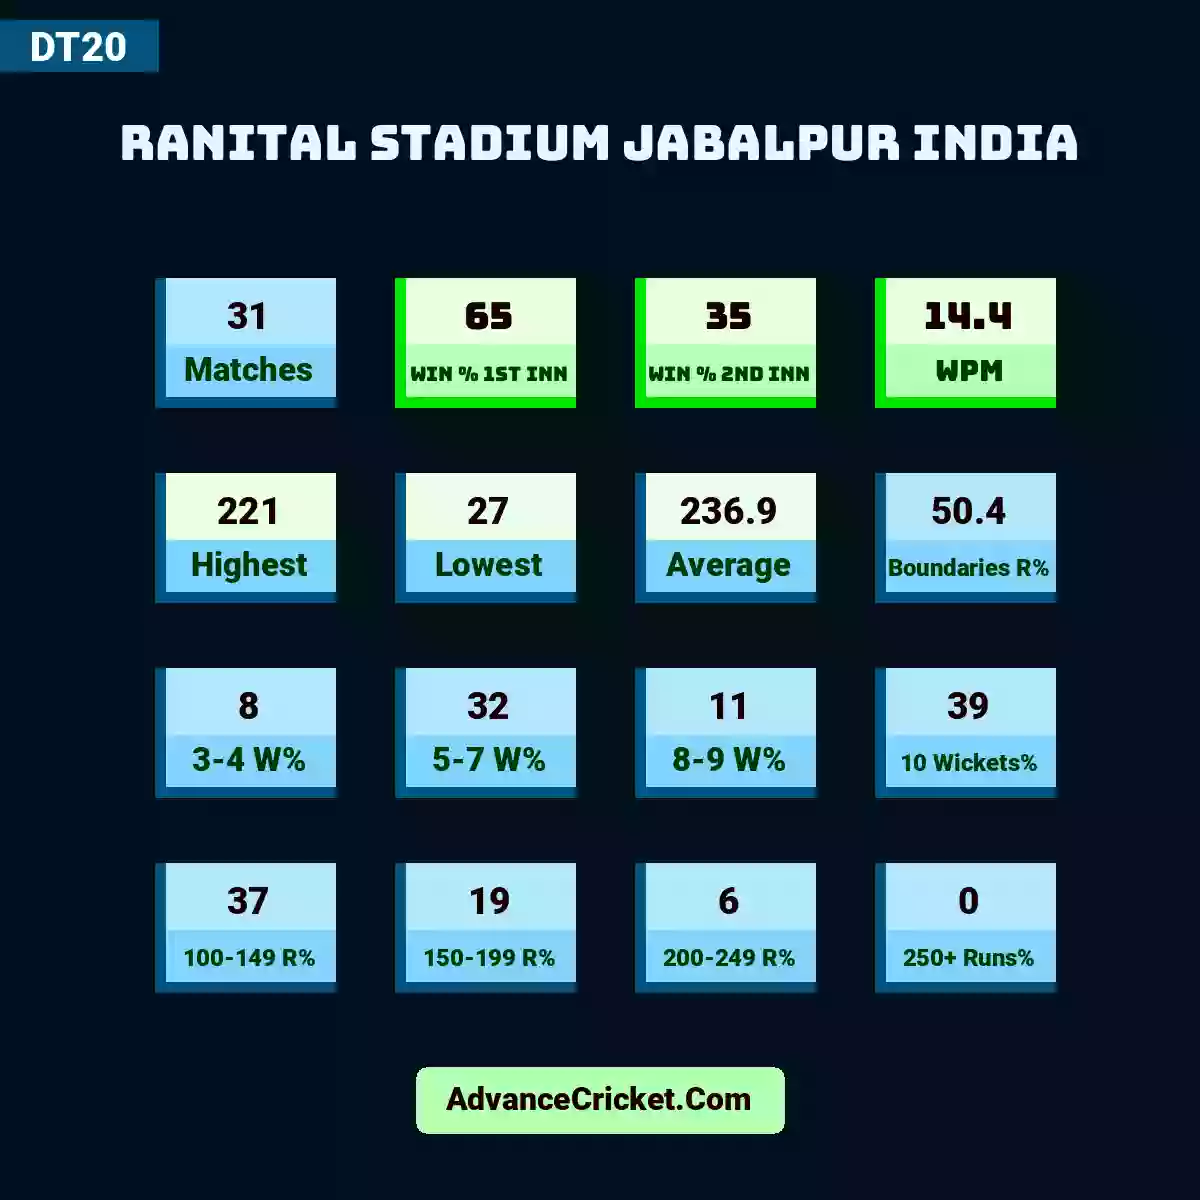 Image showing Ranital Stadium Jabalpur India with Matches: 31, Win % 1st Inn: 65, Win % 2nd Inn: 35, WPM: 14.4, Highest: 221, Lowest: 27, Average: 236.9, Boundaries R%: 50.4, 3-4 W%: 8, 5-7 W%: 32, 8-9 W%: 11, 10 Wickets%: 39, 100-149 R%: 37, 150-199 R%: 19, 200-249 R%: 6, 250+ Runs%: 0.